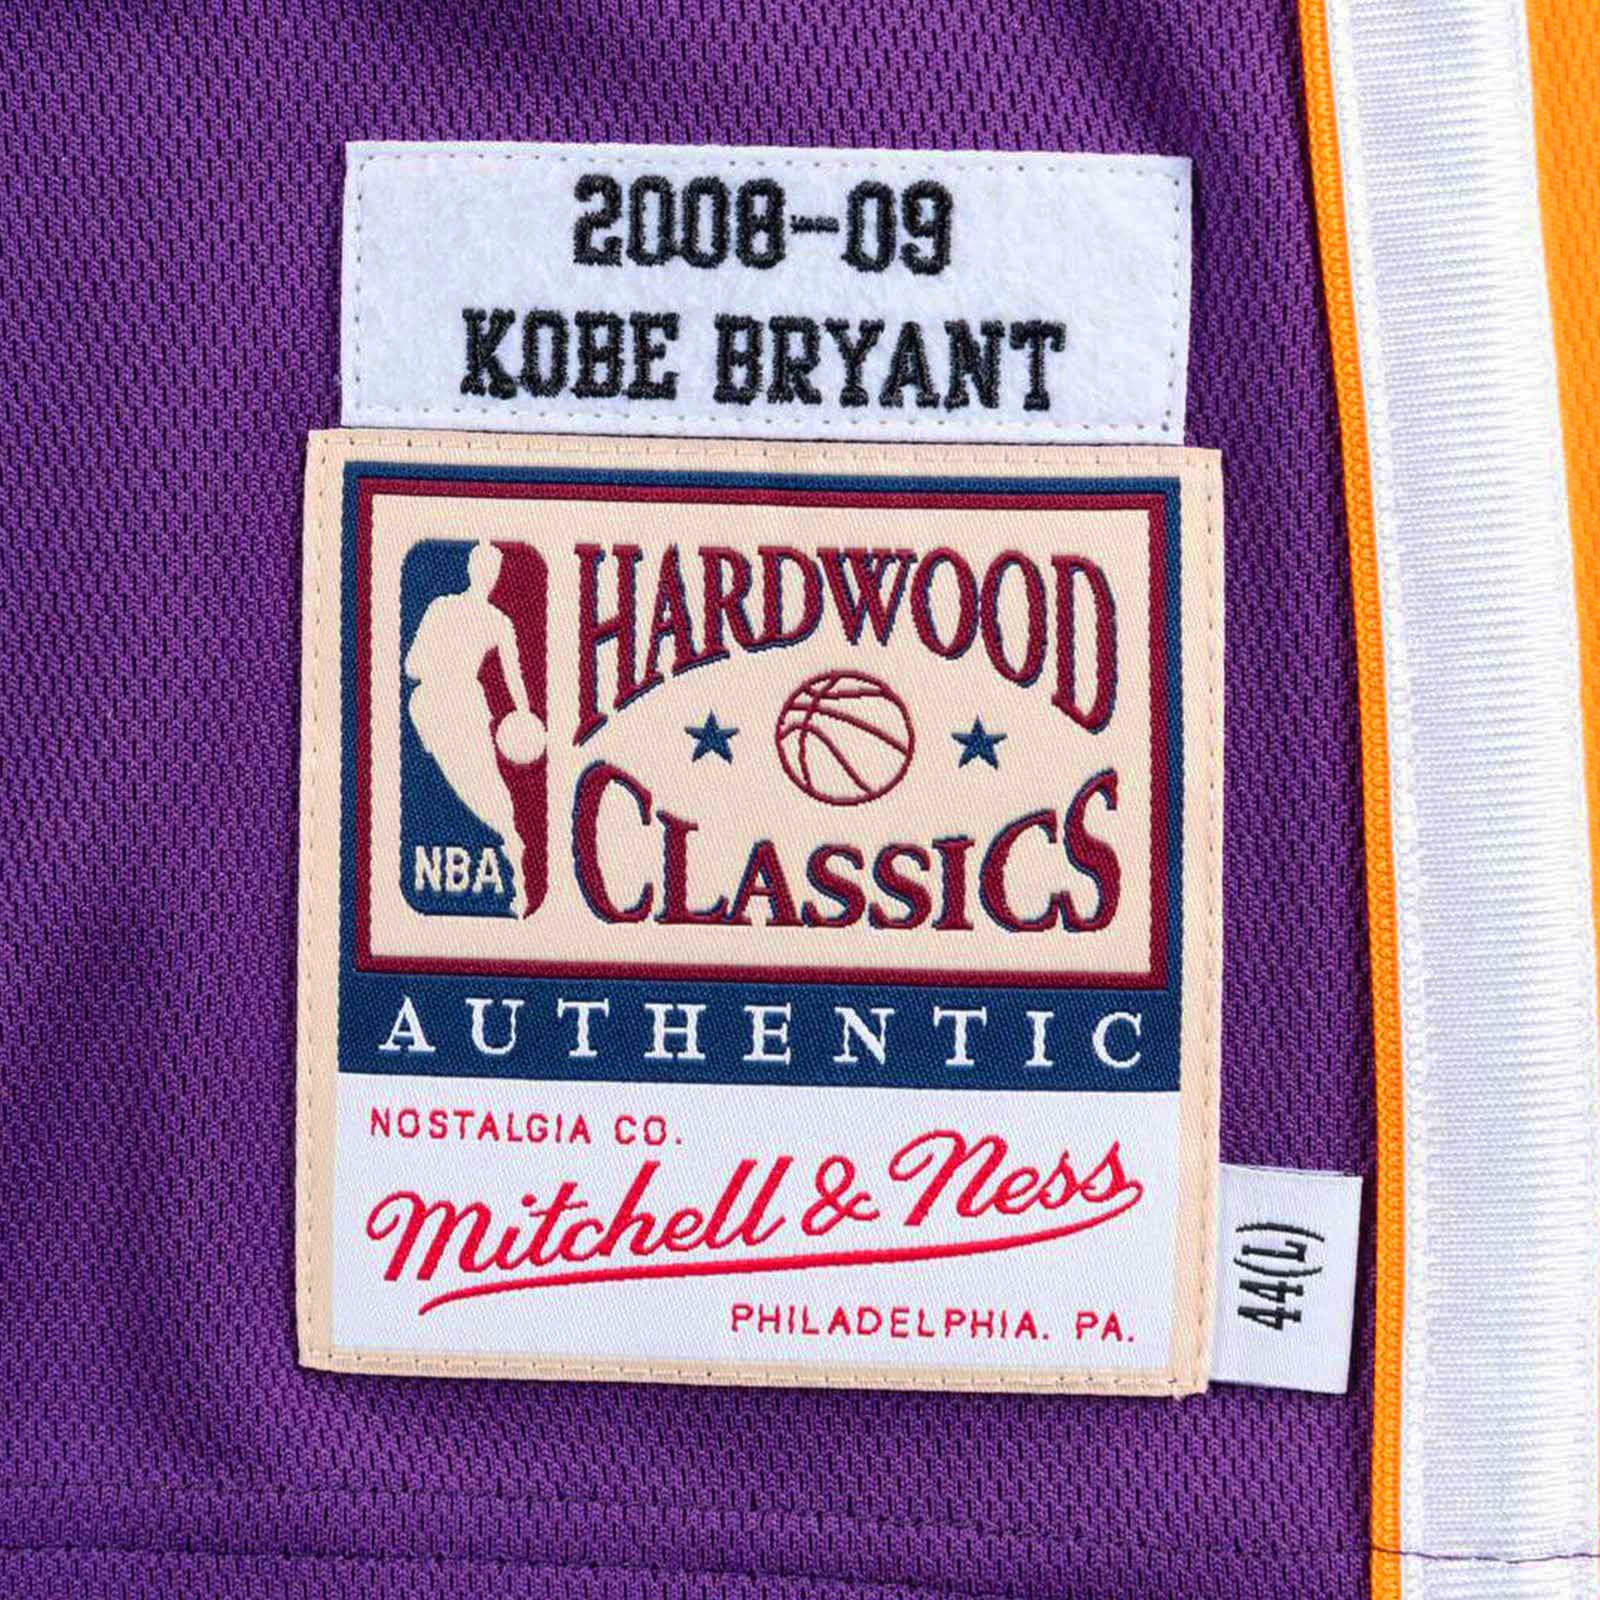 Men 8 Kobe Bryant Jersey Black Christmas Los Angeles Lakers Swingman Jersey